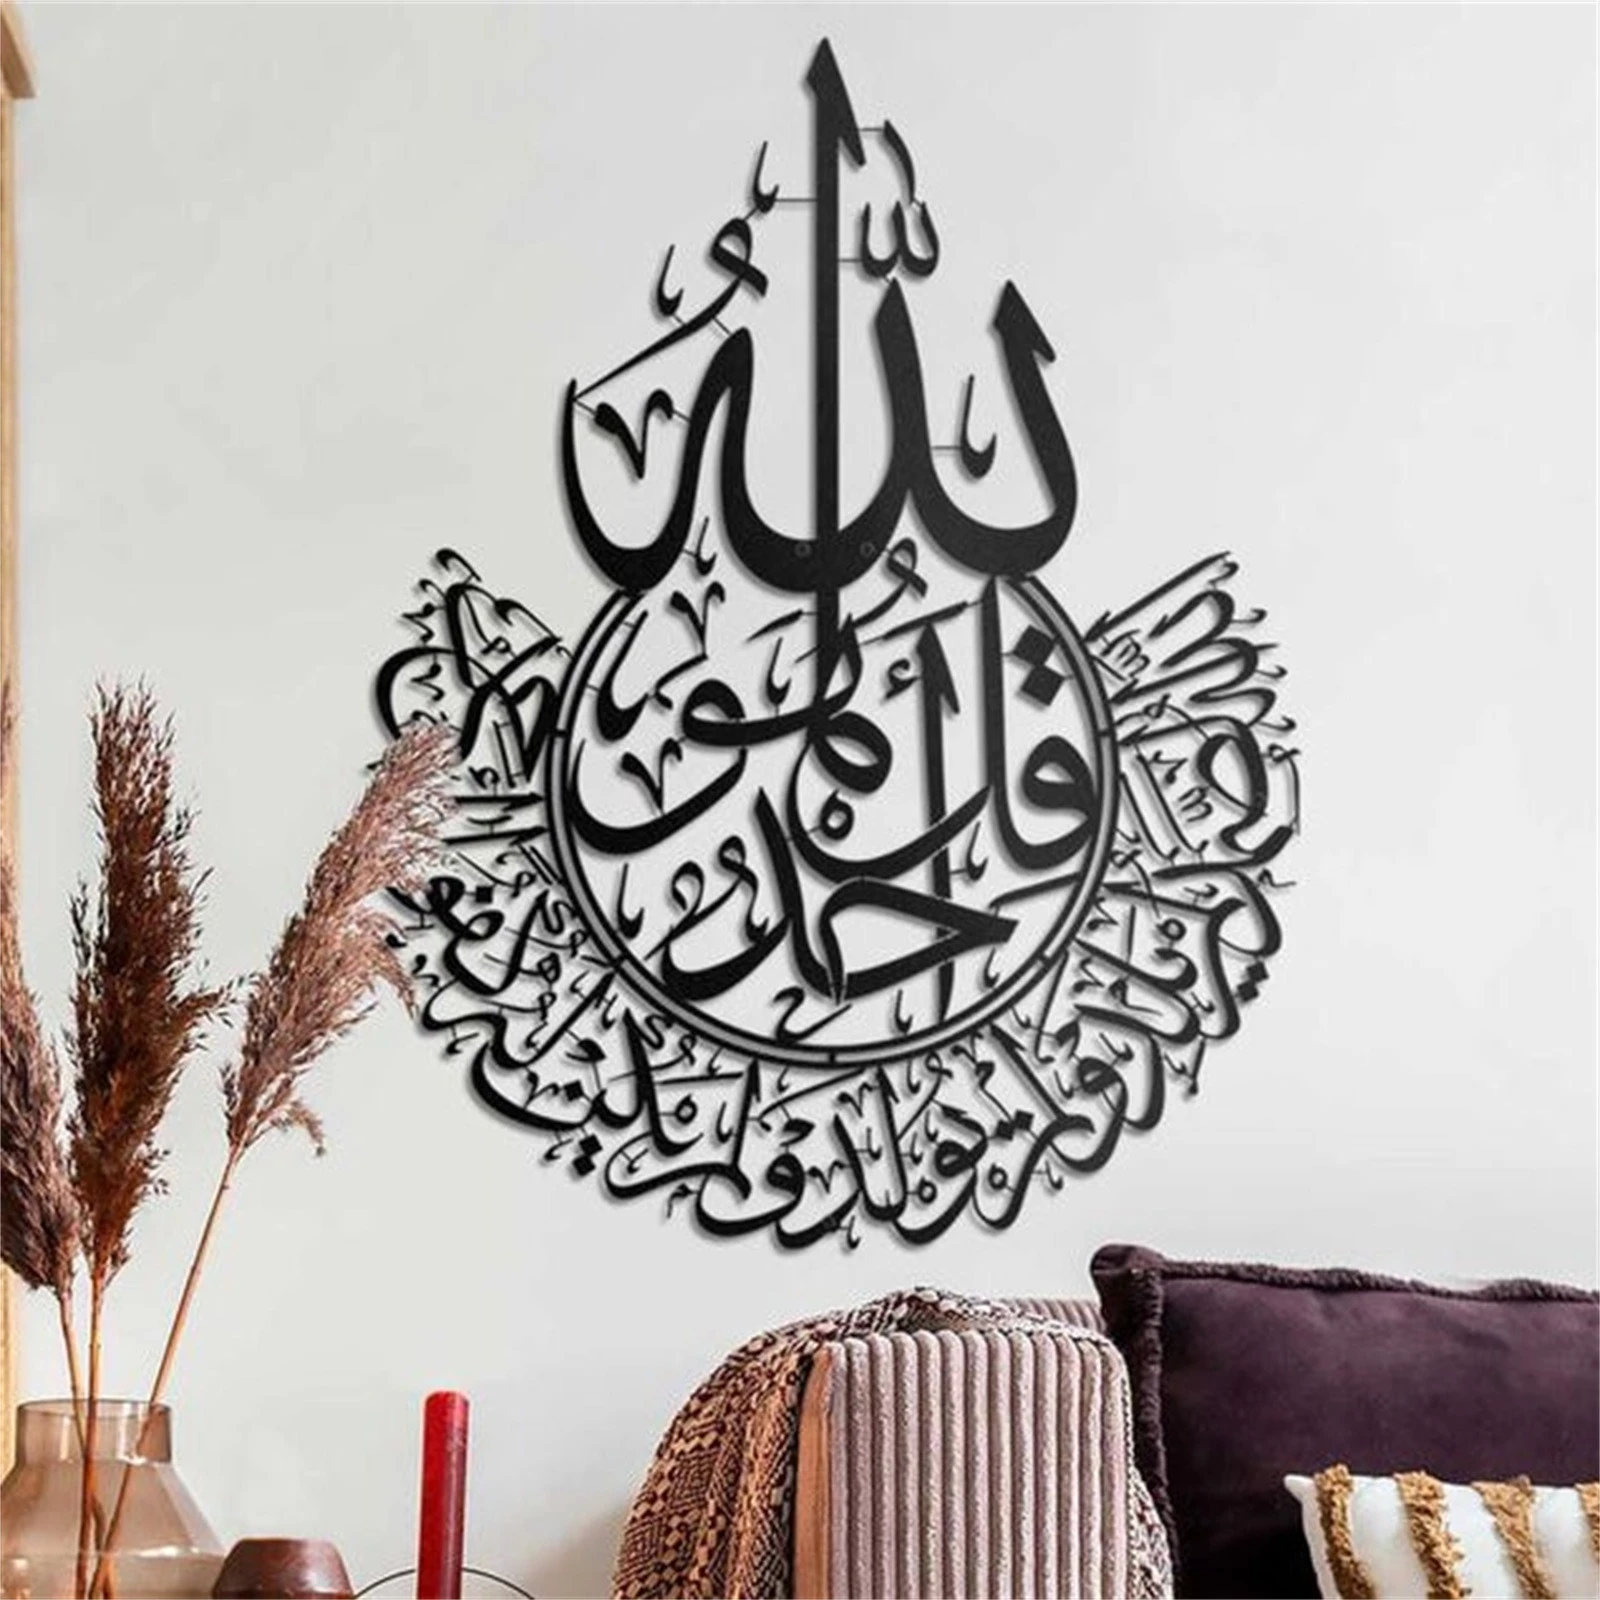 Islamic Mirror Wall Sticker Muslim Arabic Calligraphy Home Art Decal Decor.